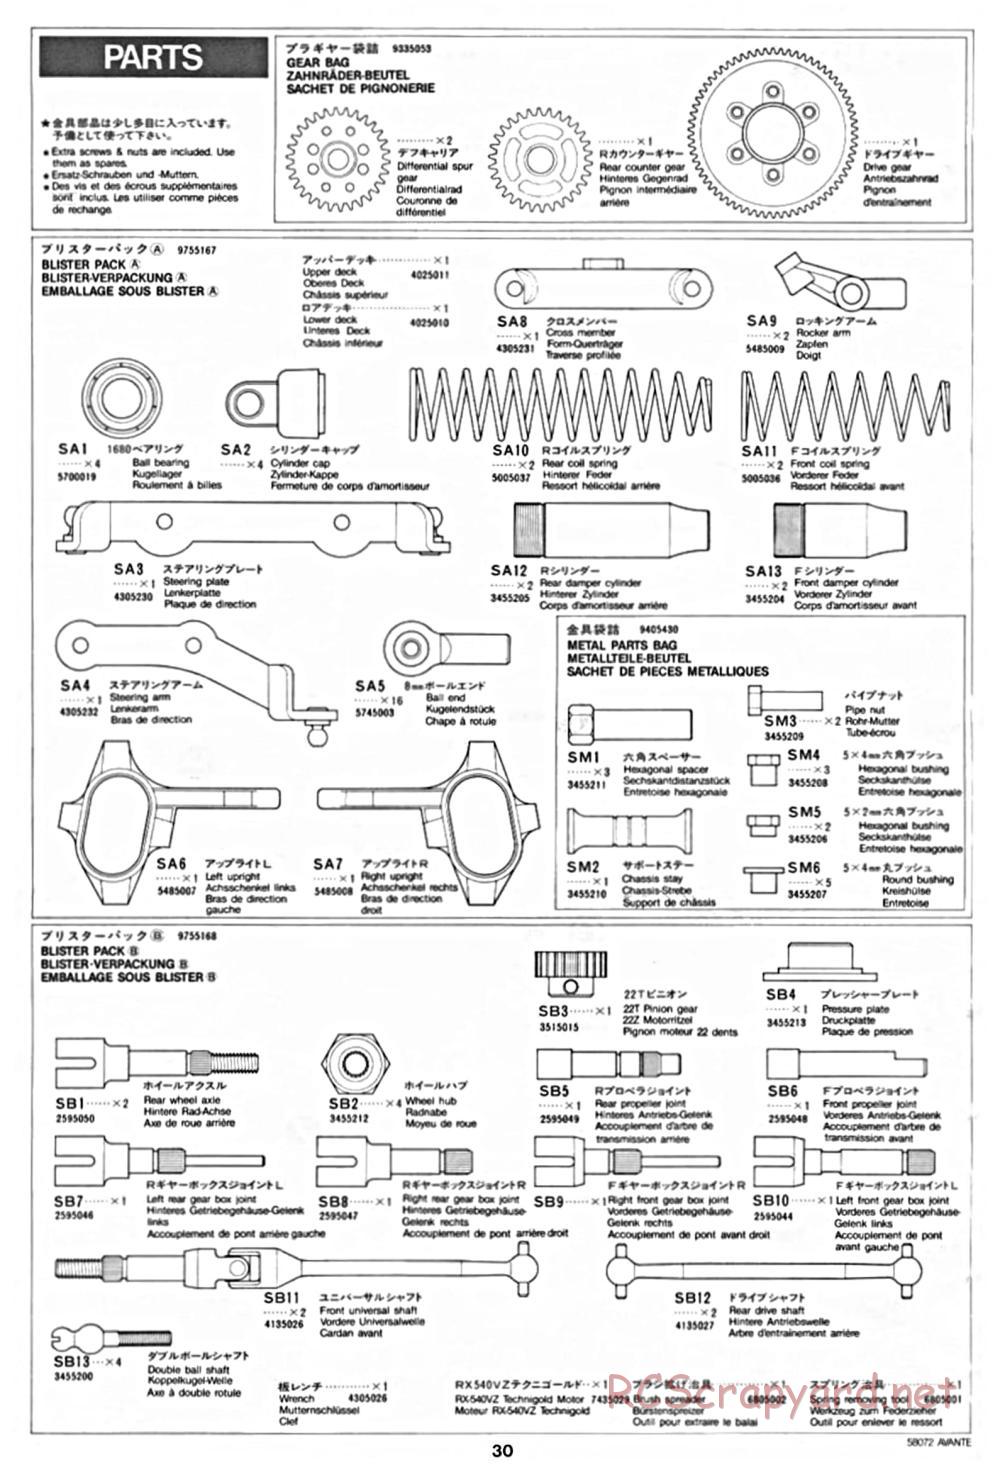 Tamiya - Avante - 58072 - Manual - Page 30